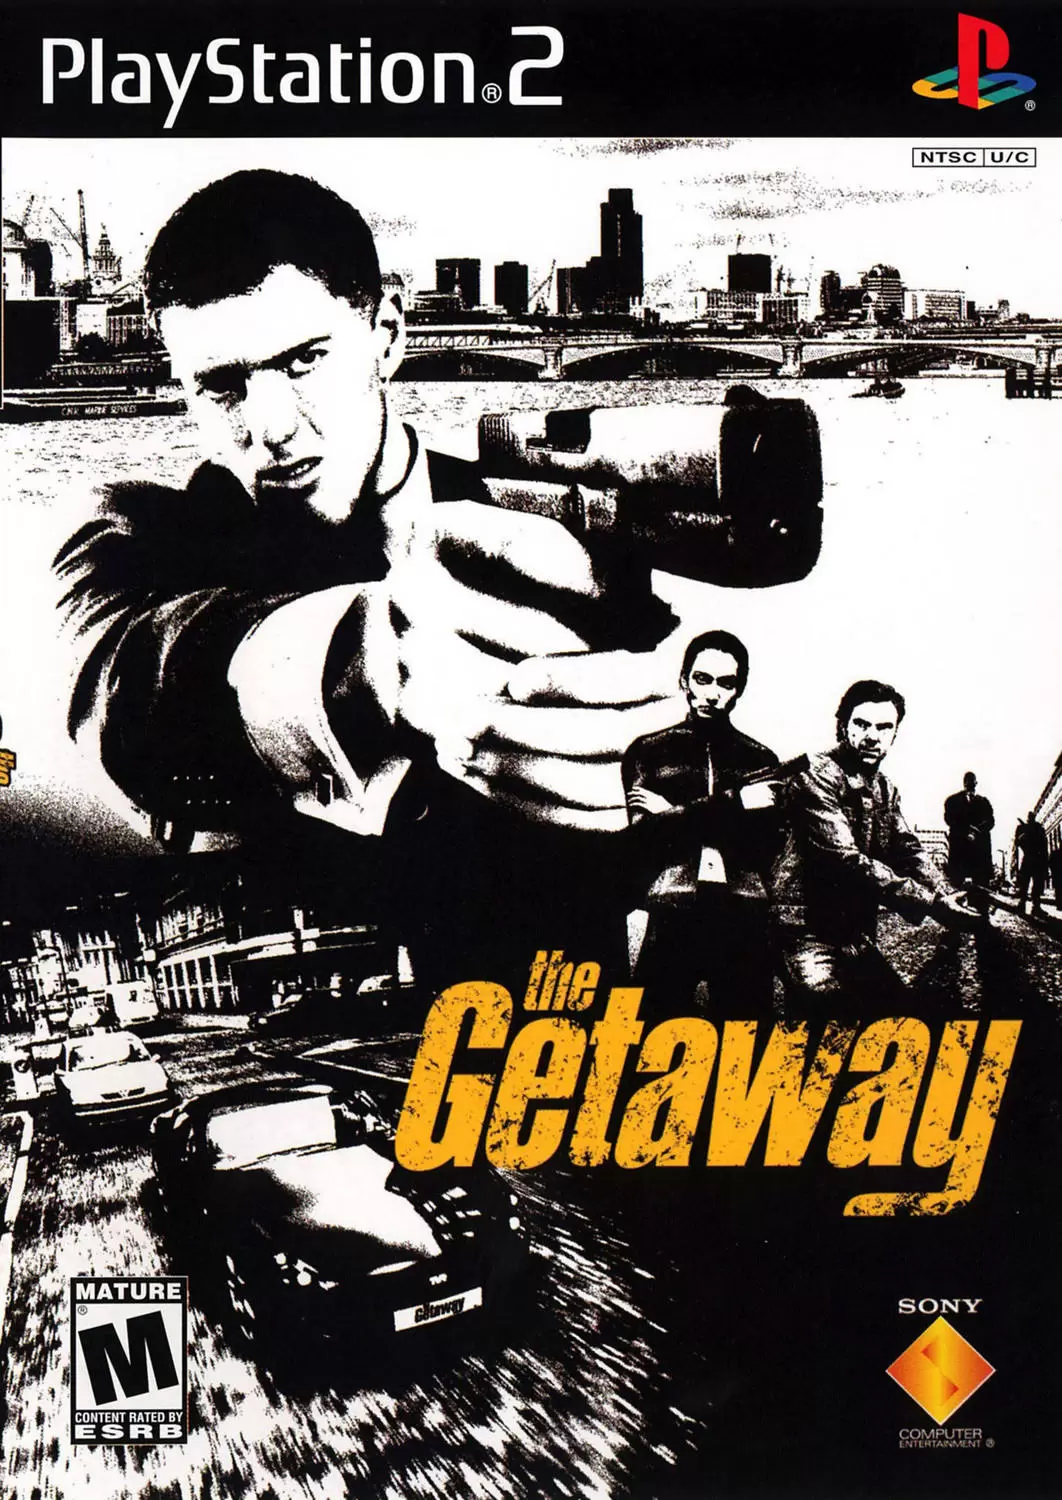 PS2 Games - The Getaway